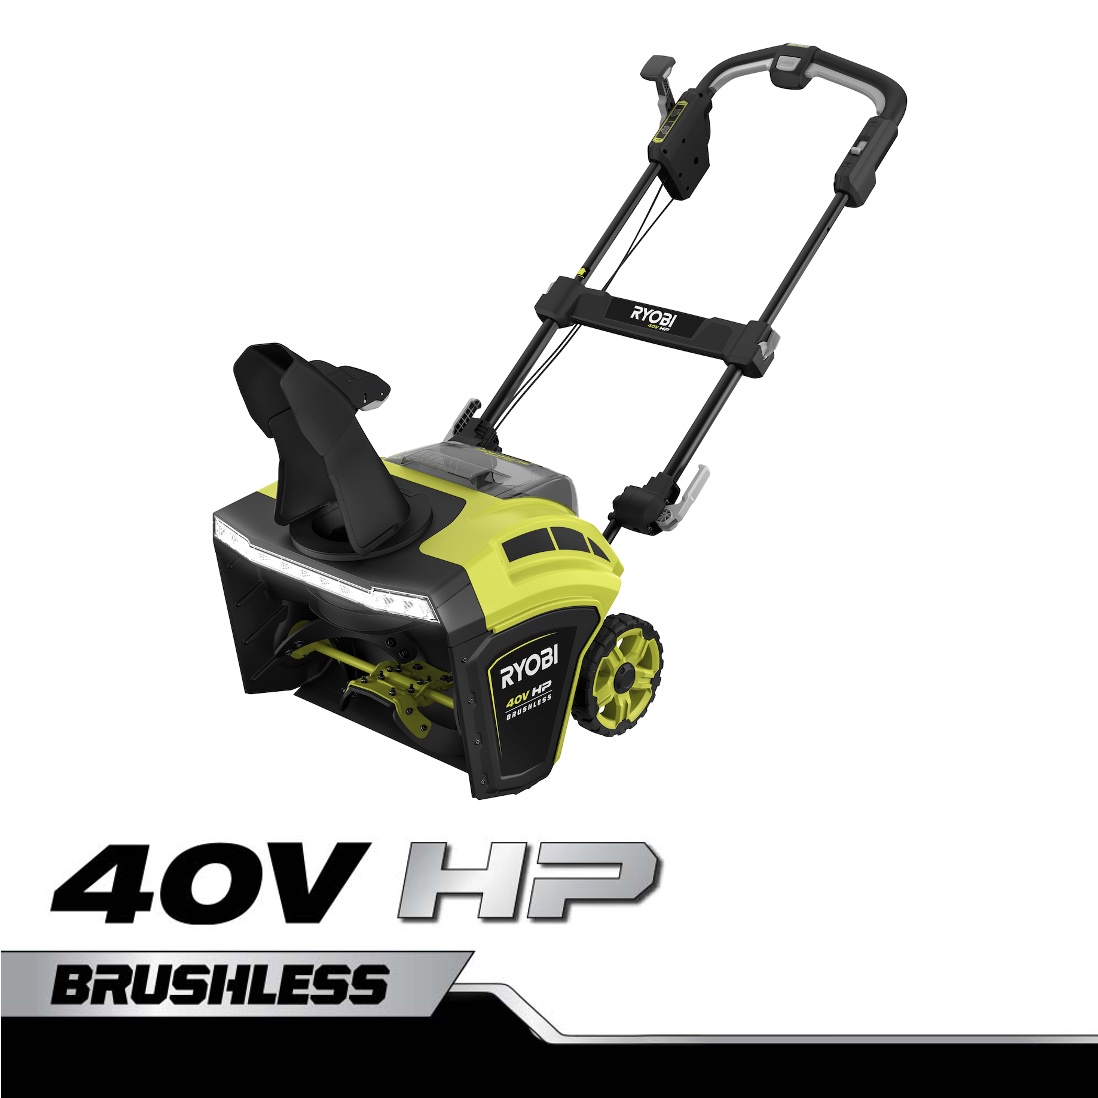 40V HP Brushless 21 SNOW THROWER KIT - RYOBI Tools